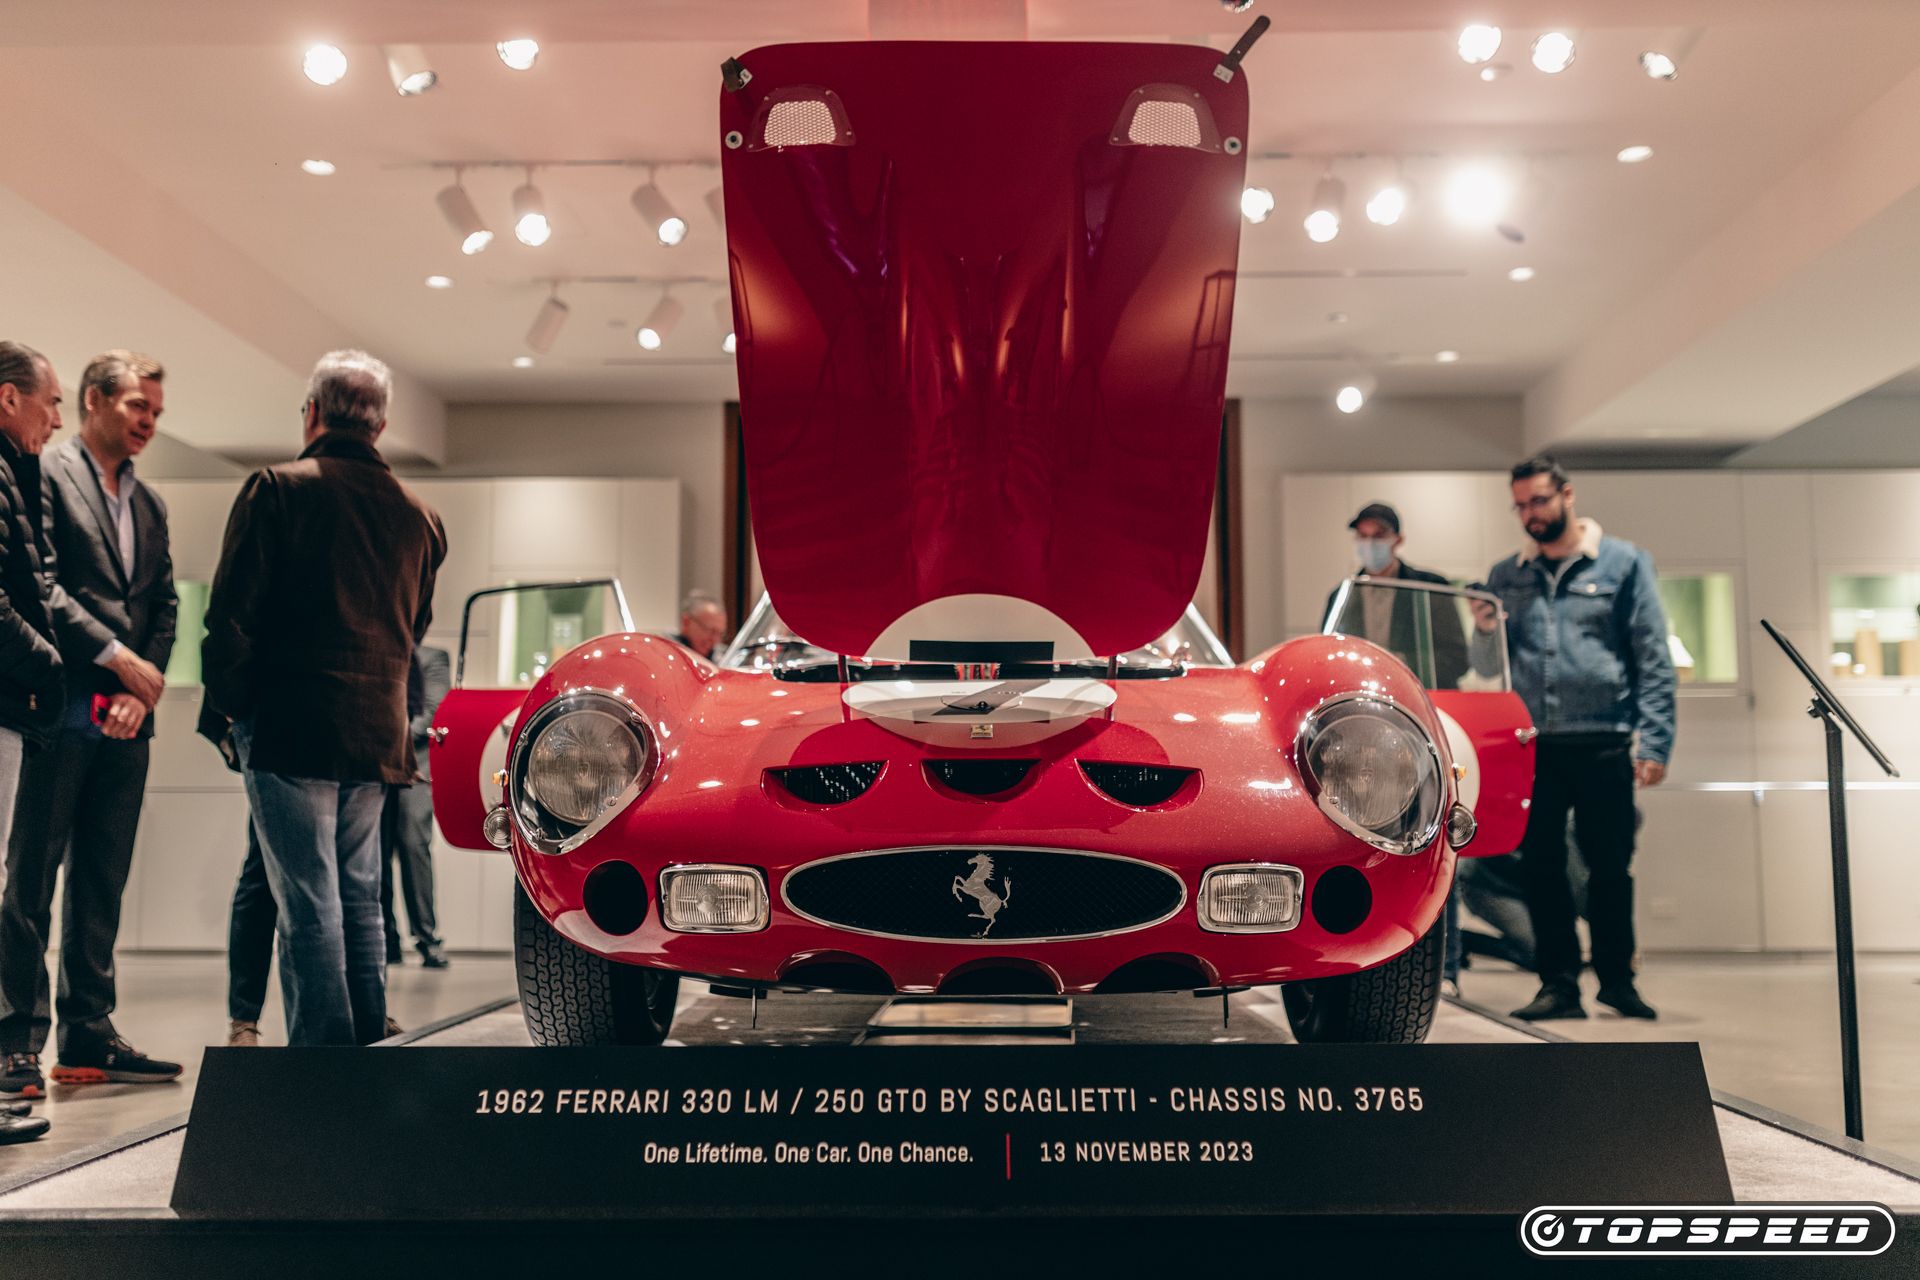 1962 Ferrari 330 LM - 250 GTO RMSothebys-17-2